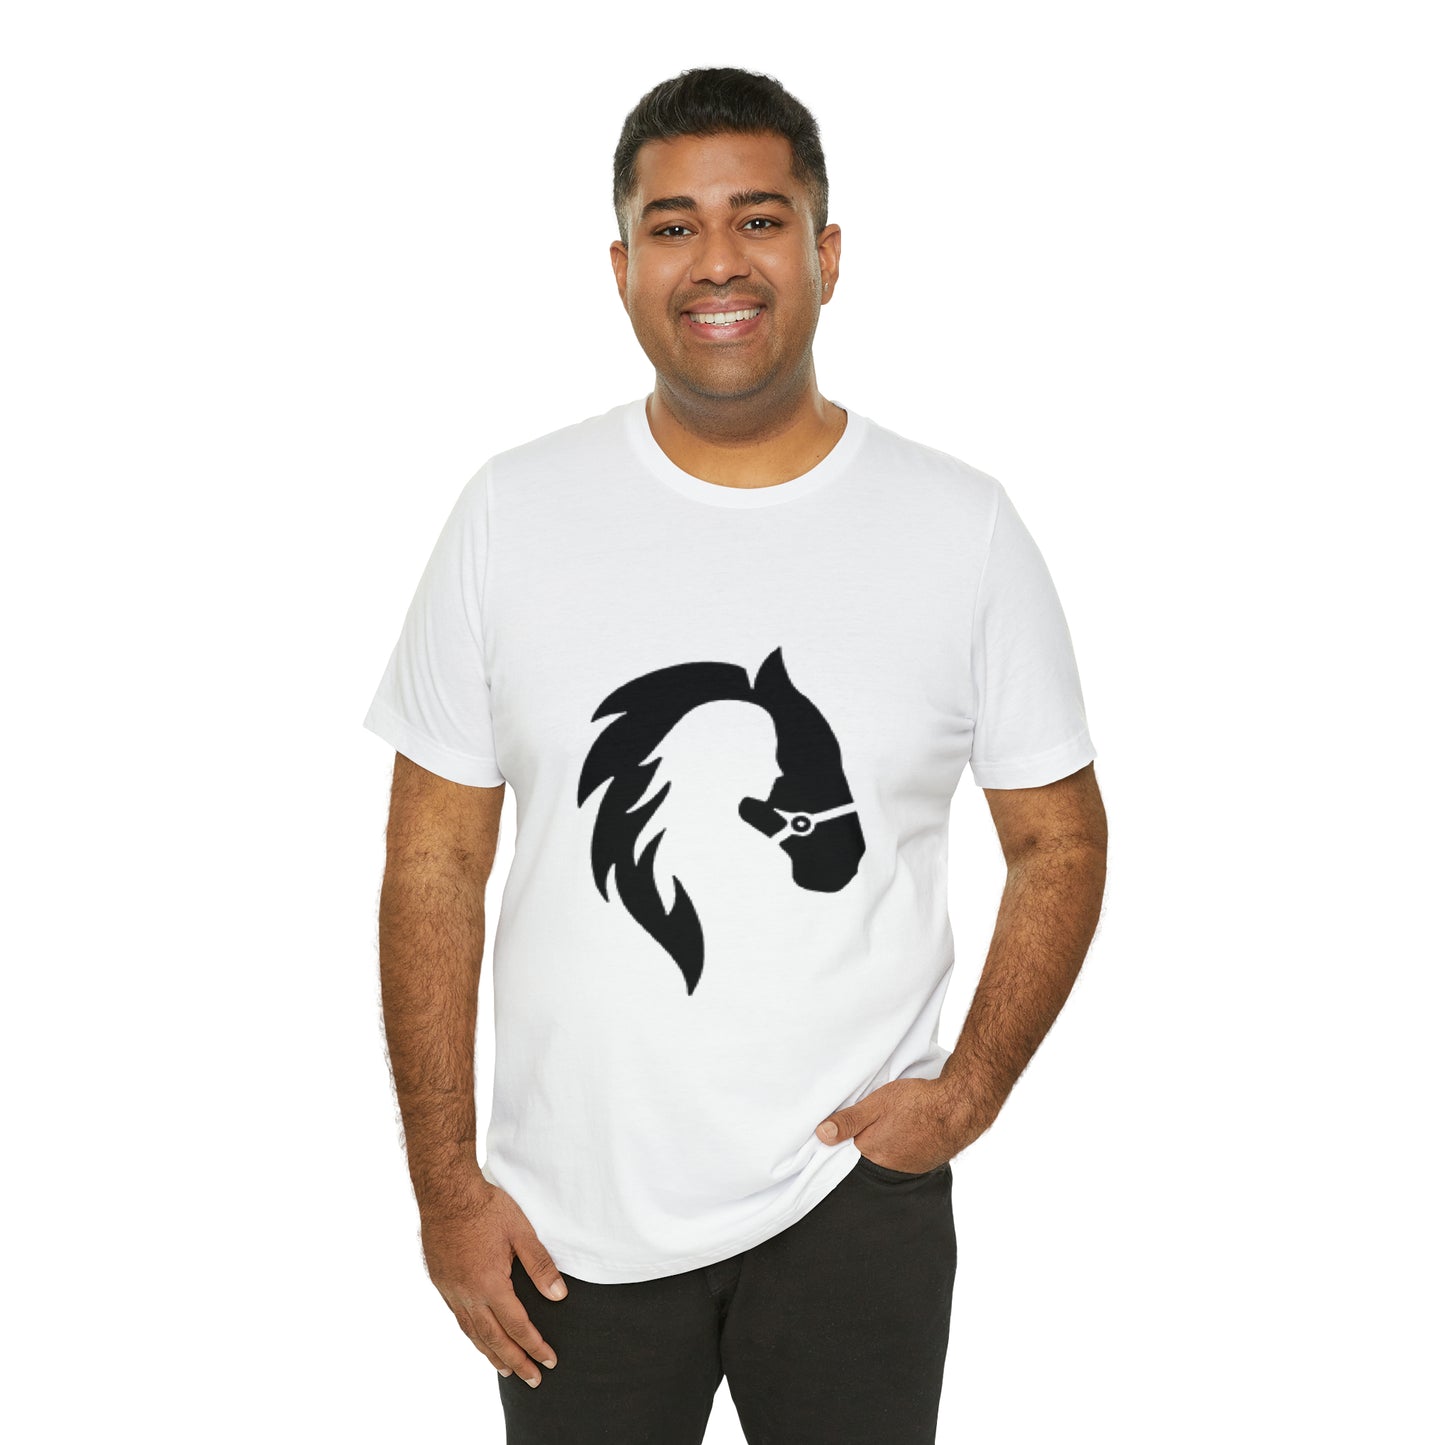 Silhouette of Girl and Horse - Unisex Short Sleeve Tee - White Logo